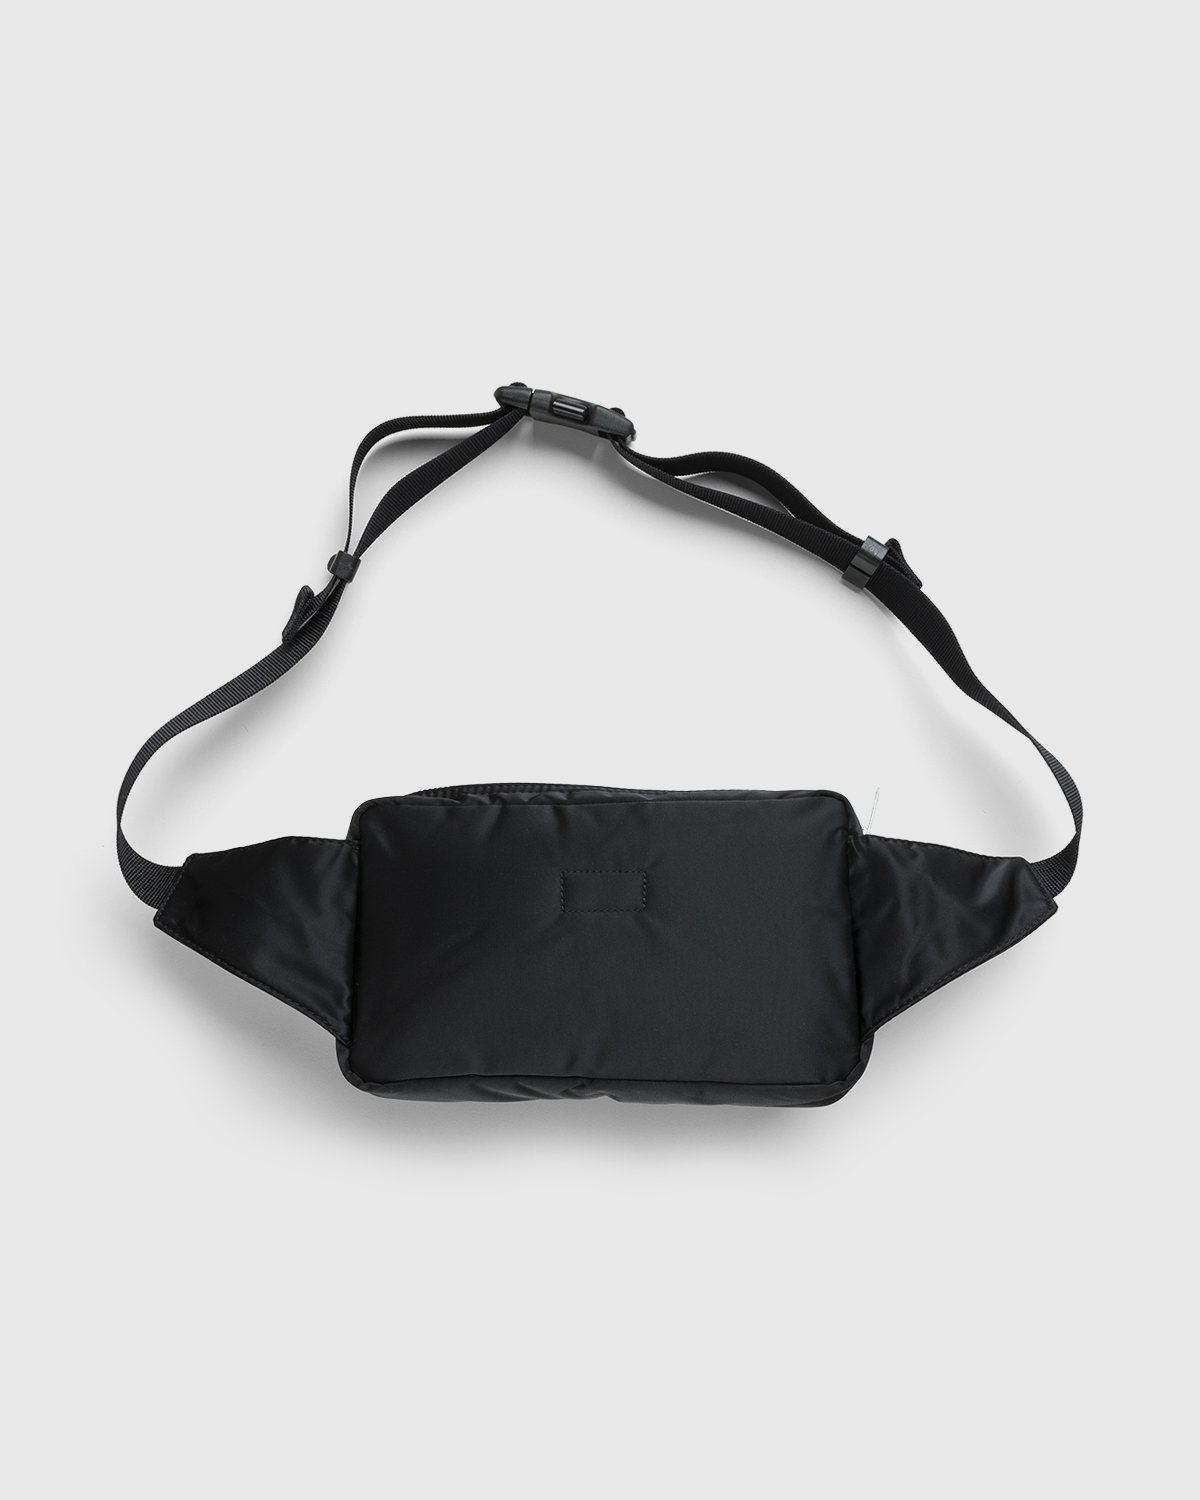 Porter-Yoshida & Co. - Tanker Waist Belt Black - Accessories - Black - Image 2